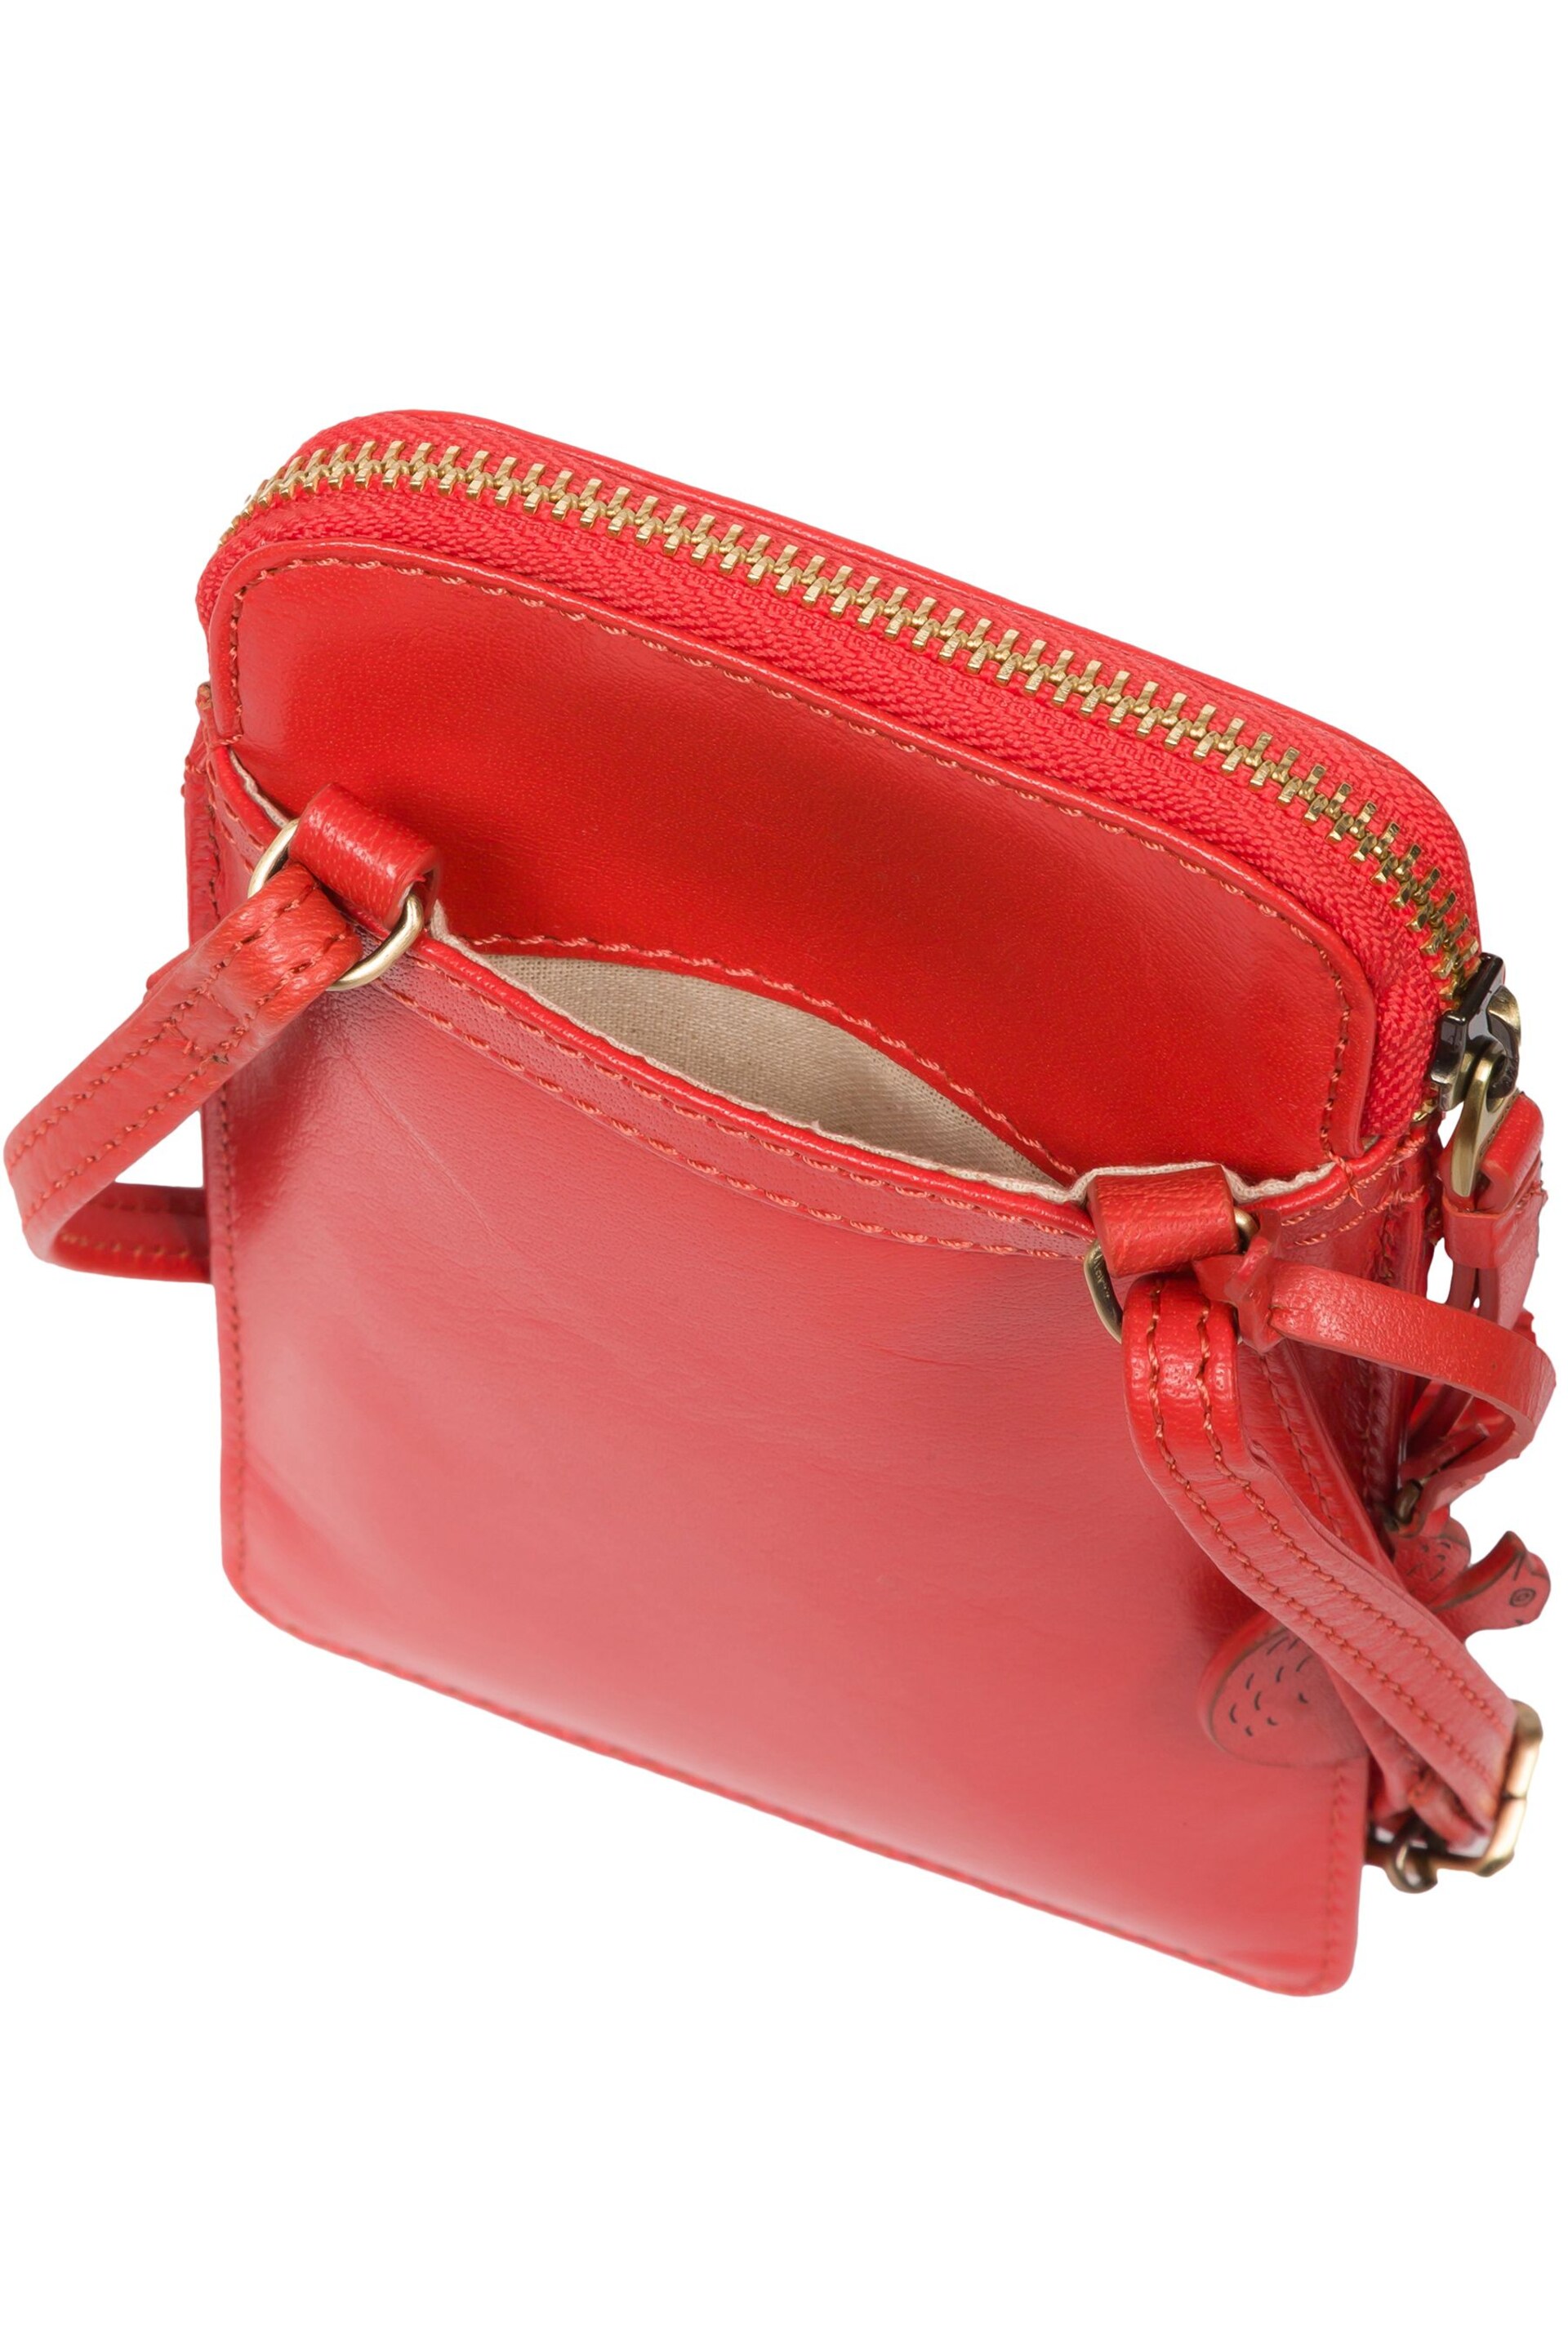 Conkca Bambino Leather Cross-Body Phone Bag - Image 7 of 8